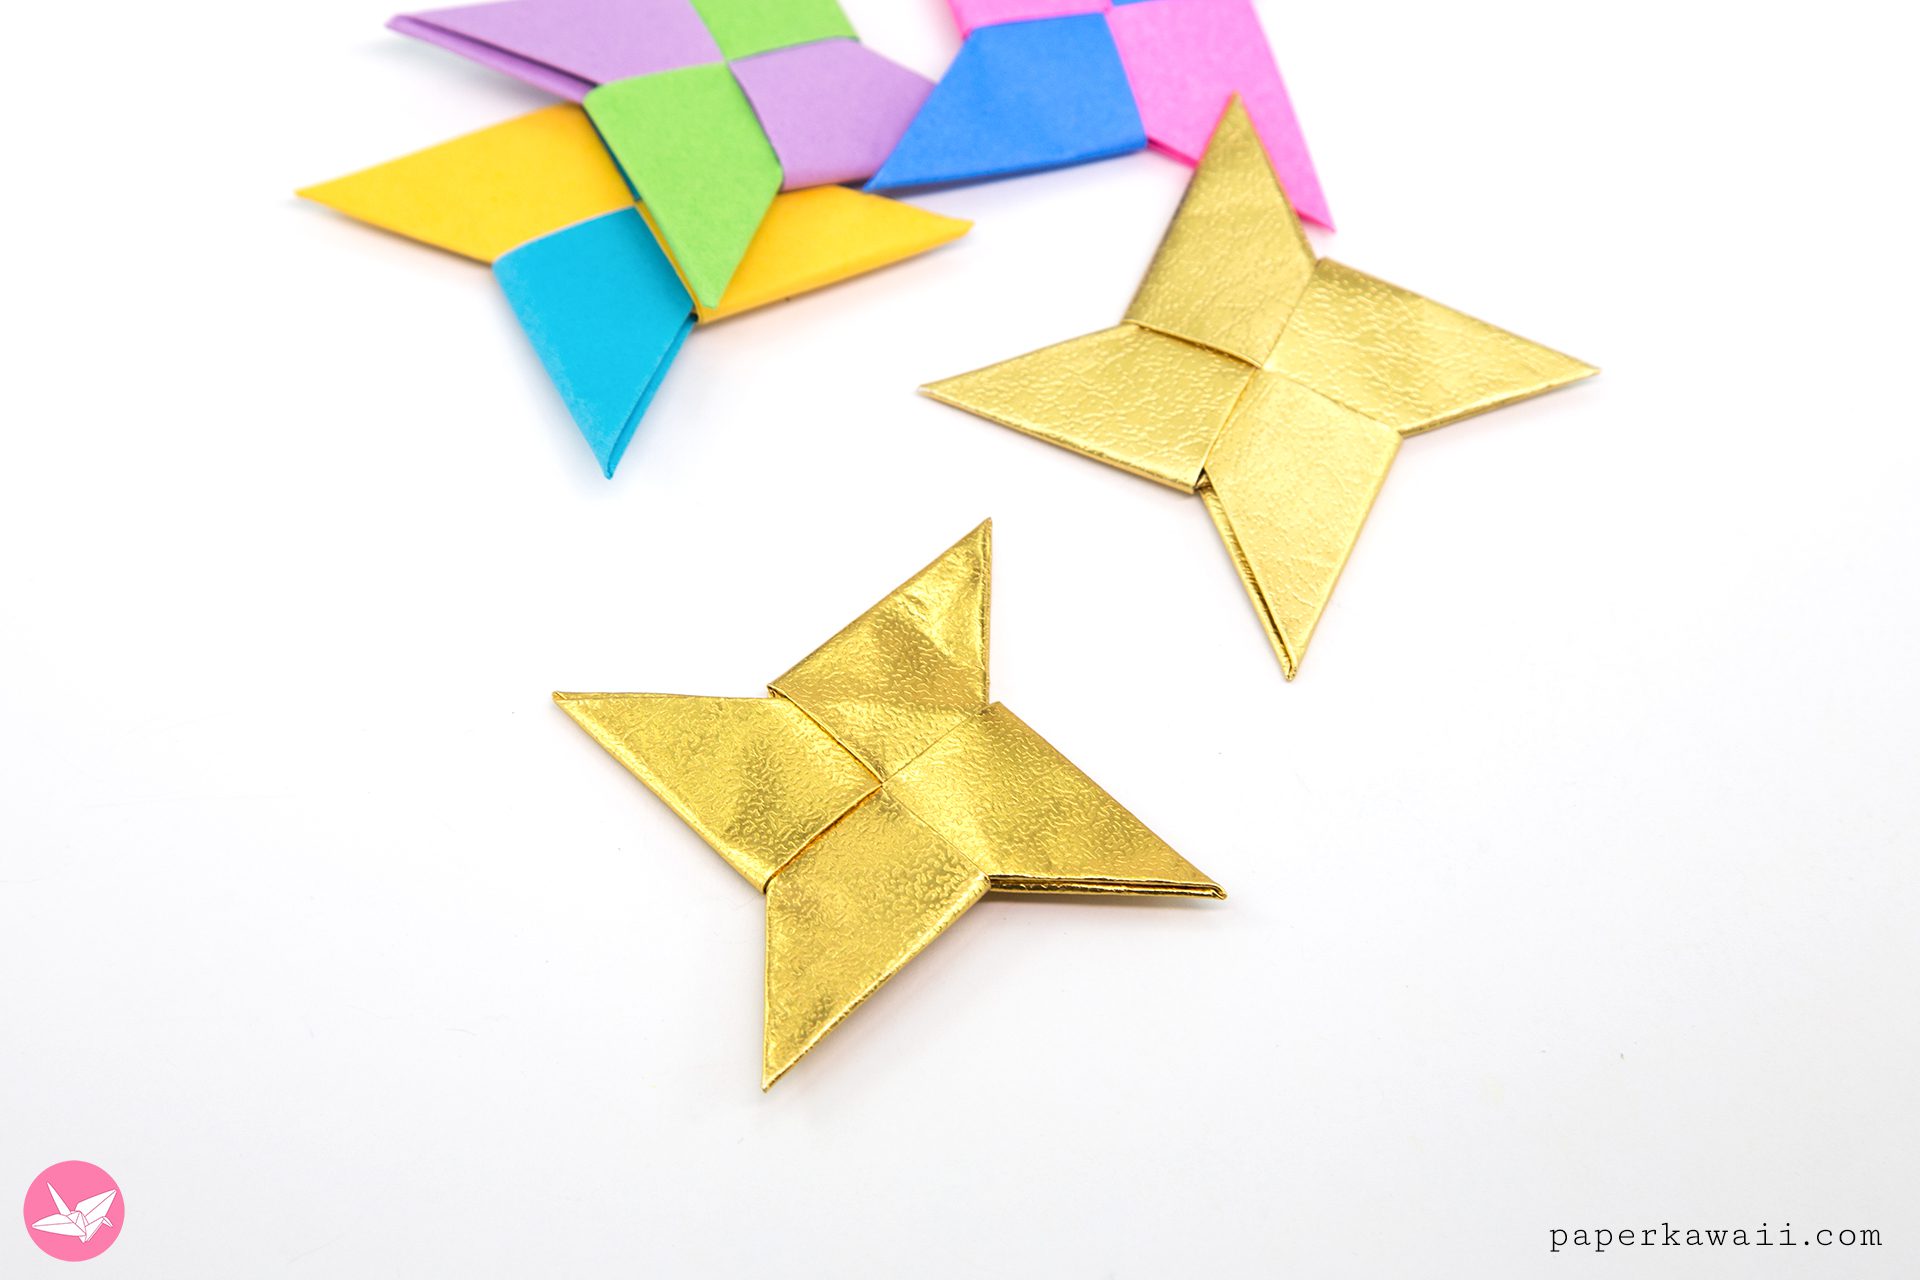 origami ninja star tutorial